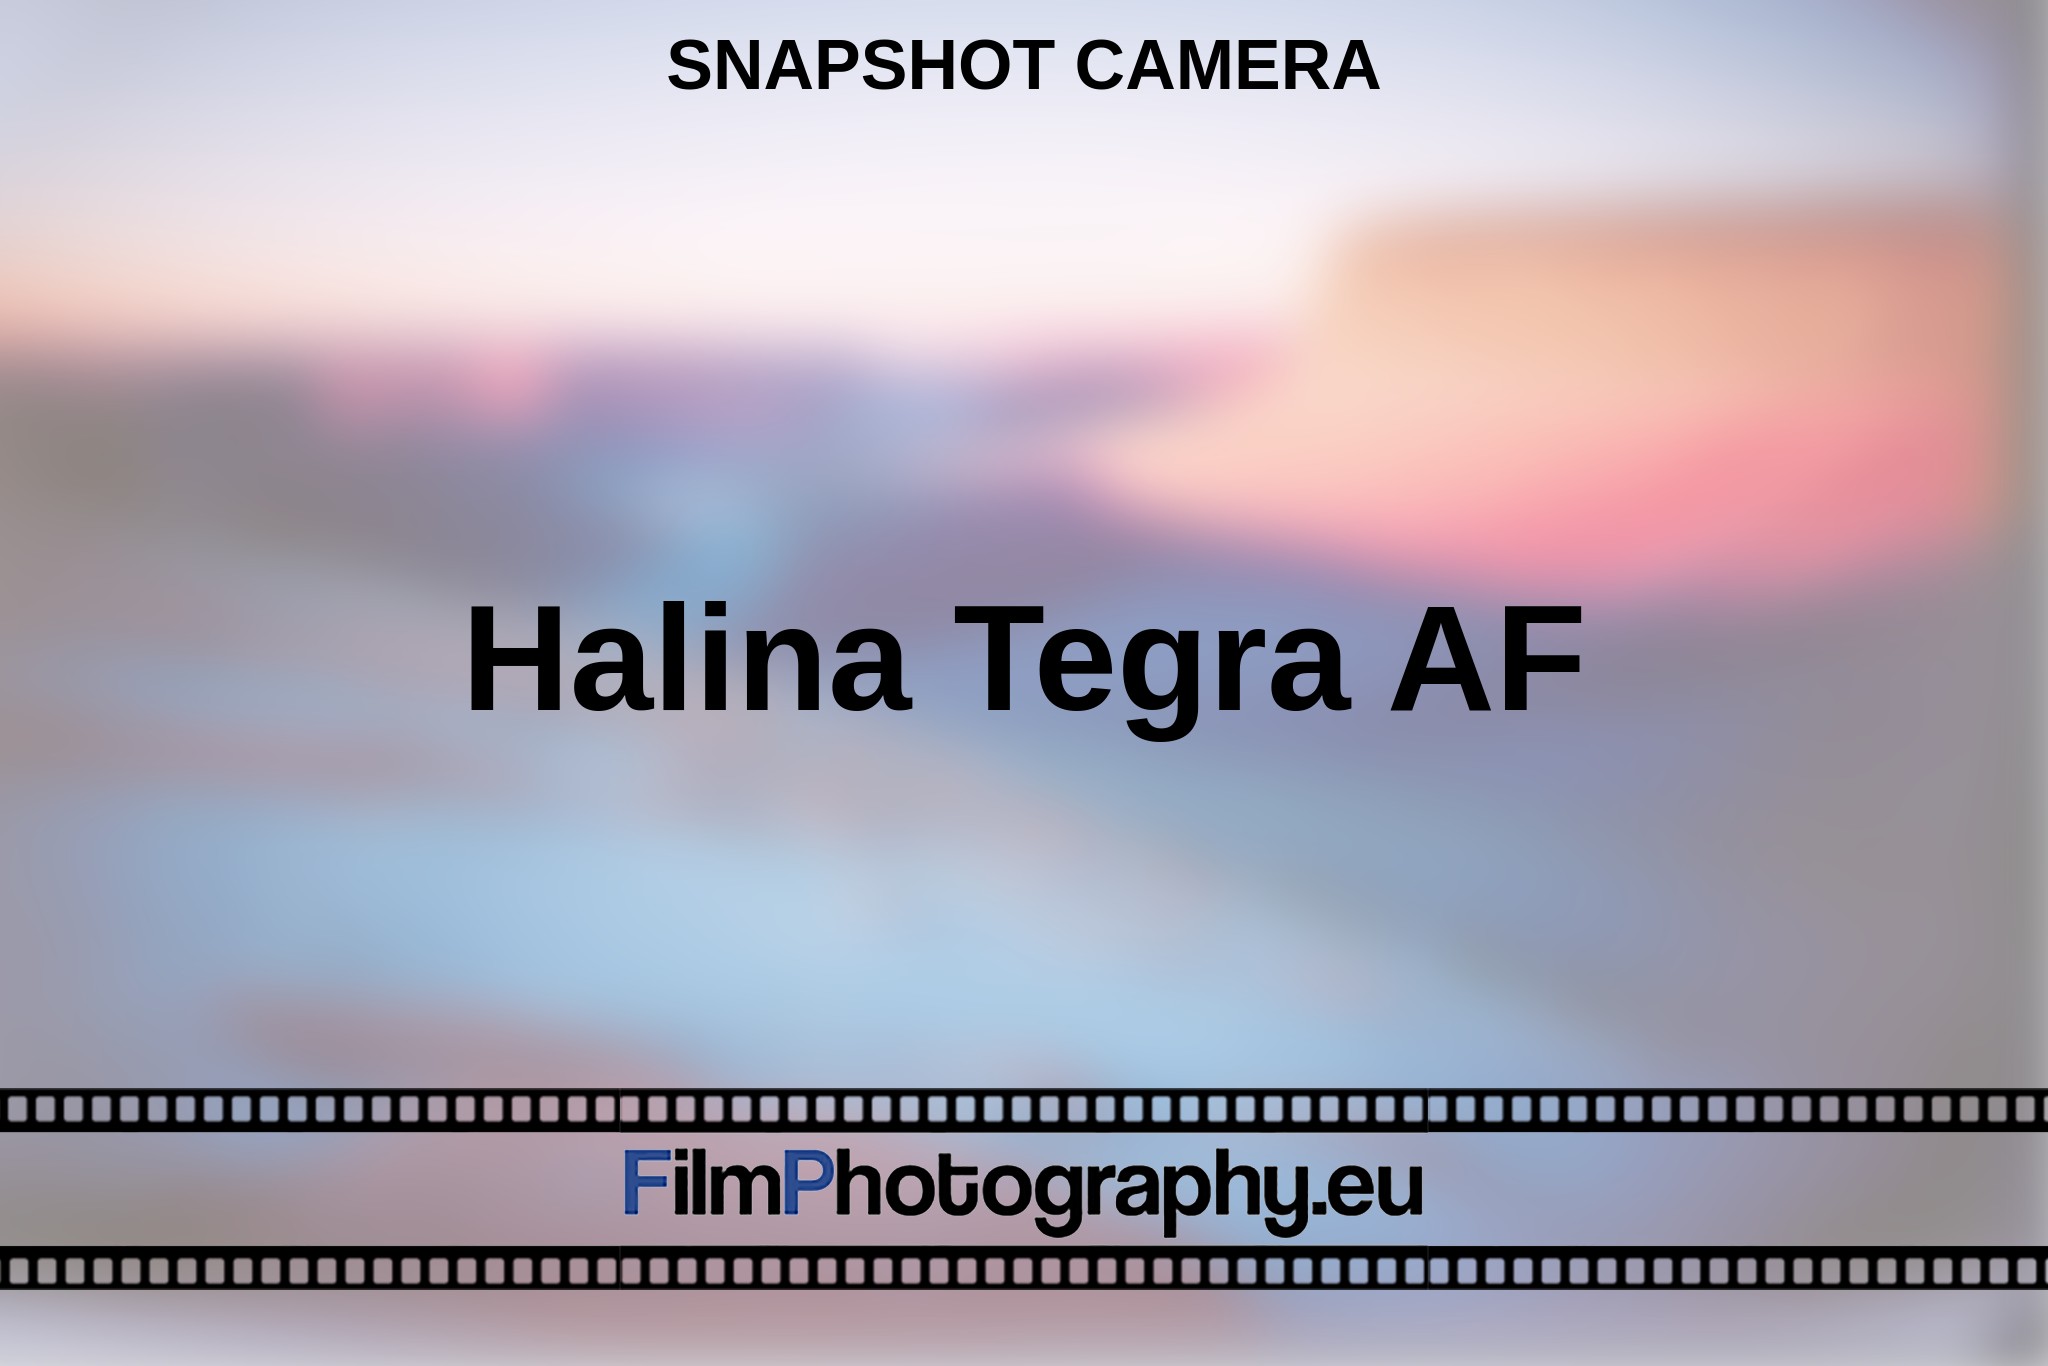 halina-tegra-af-snapshot-camera-en-bnv.jpg